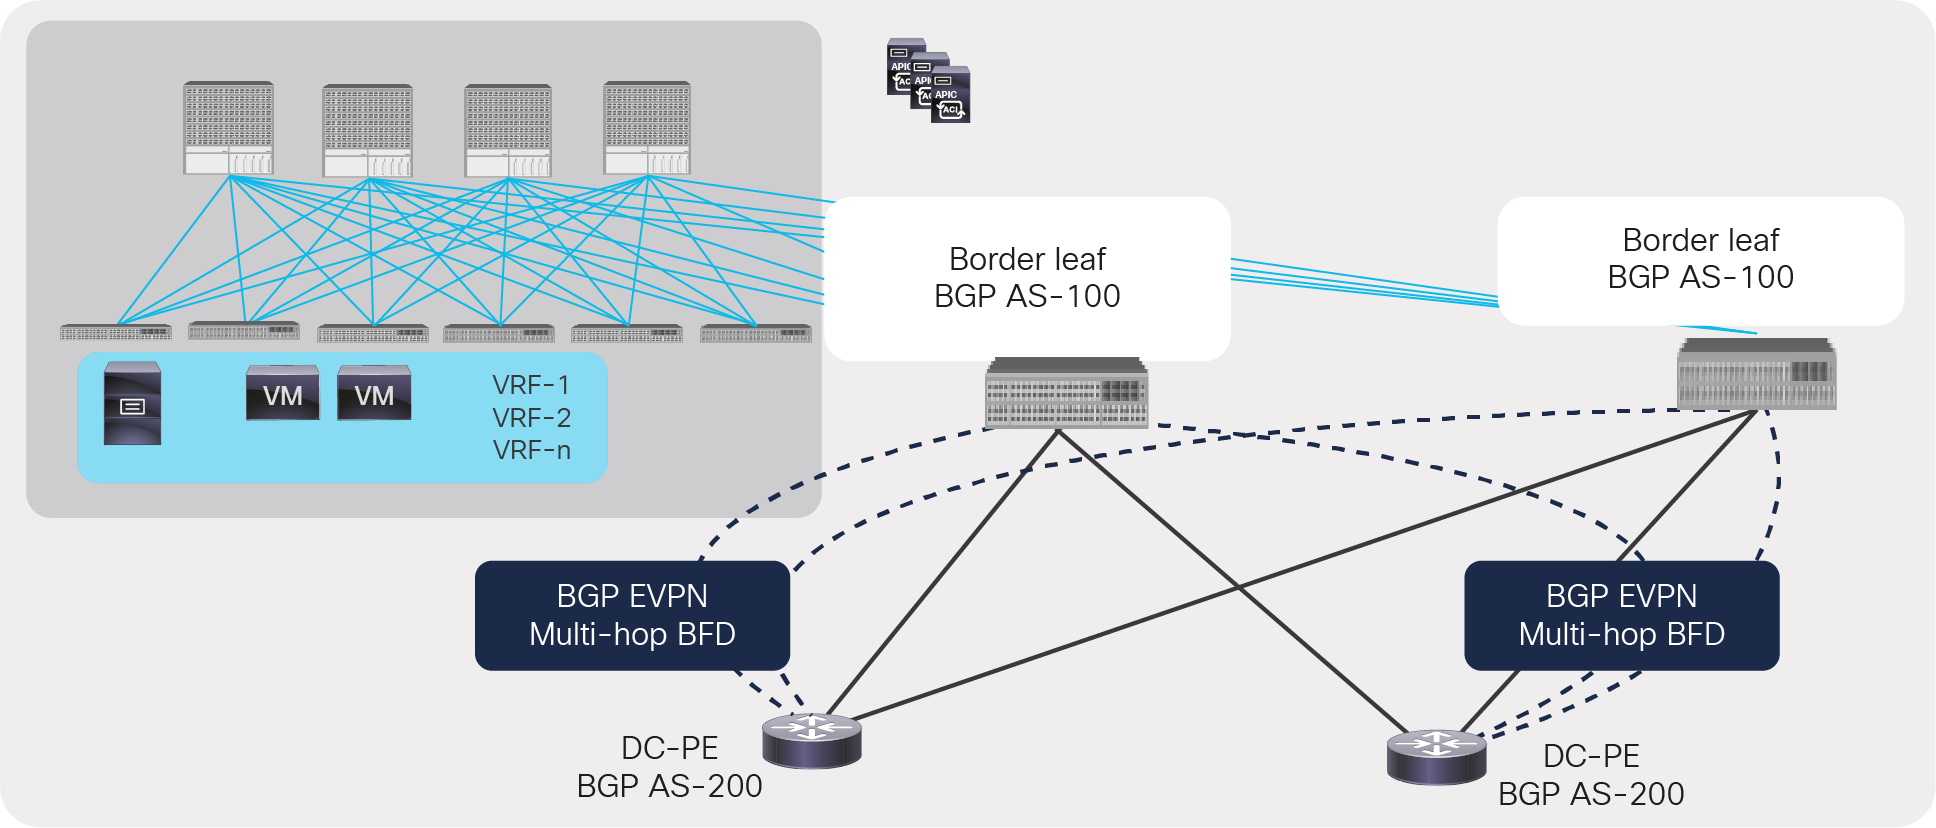 BGP EVPN session between ACI border leaf and DC-PE with multi-hop BFD